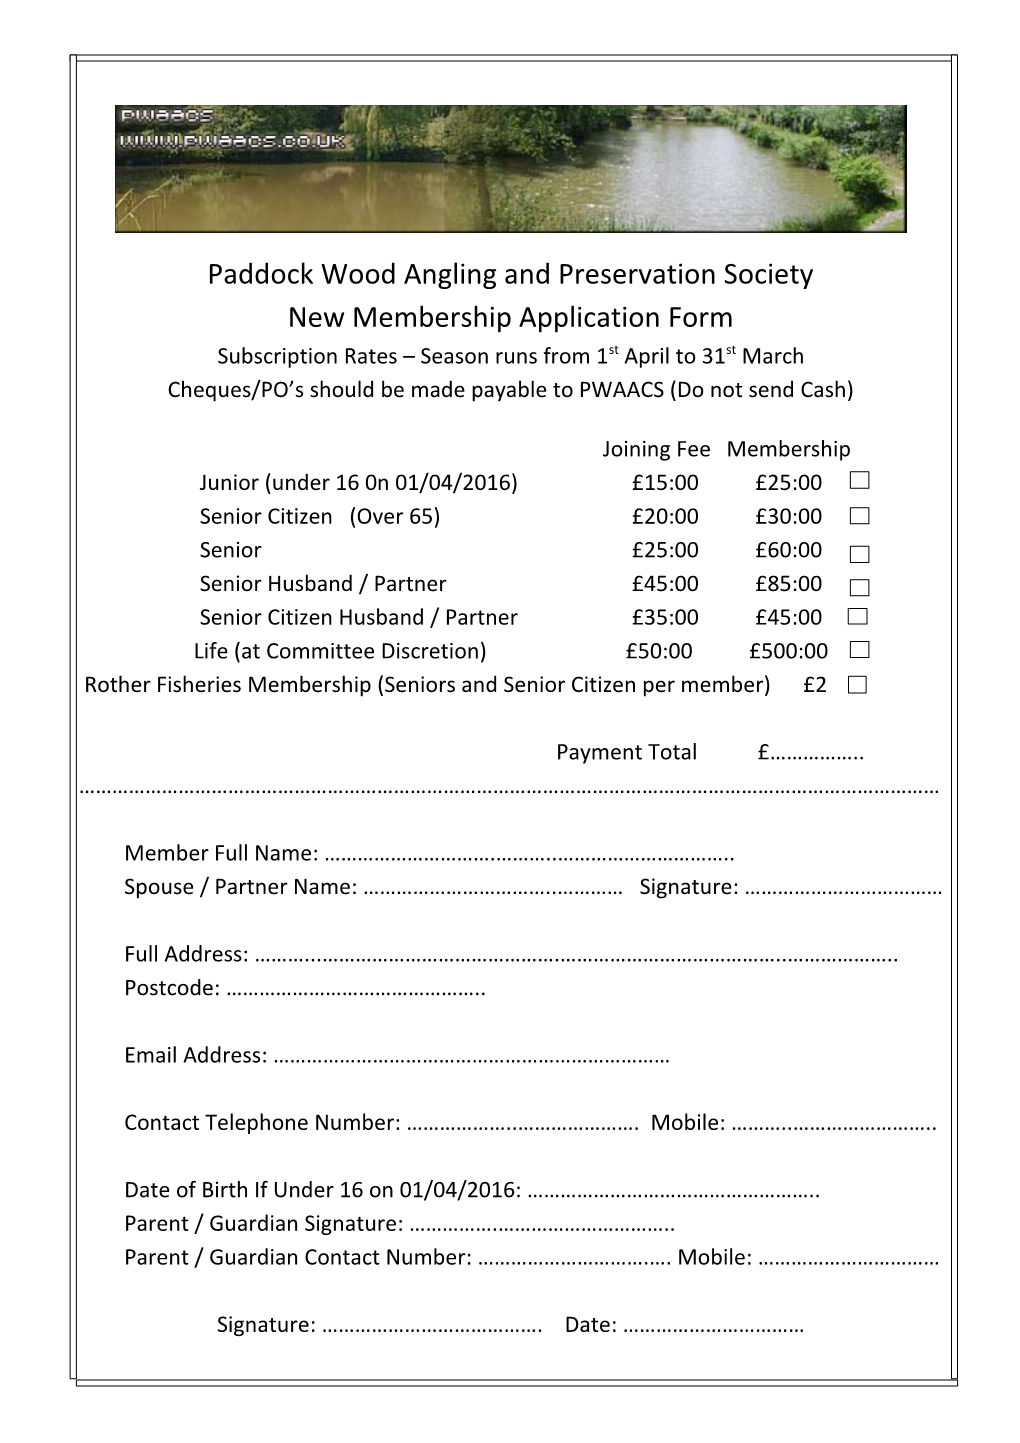 Paddock Wood Angling and Preservation Society New Membership Application Form